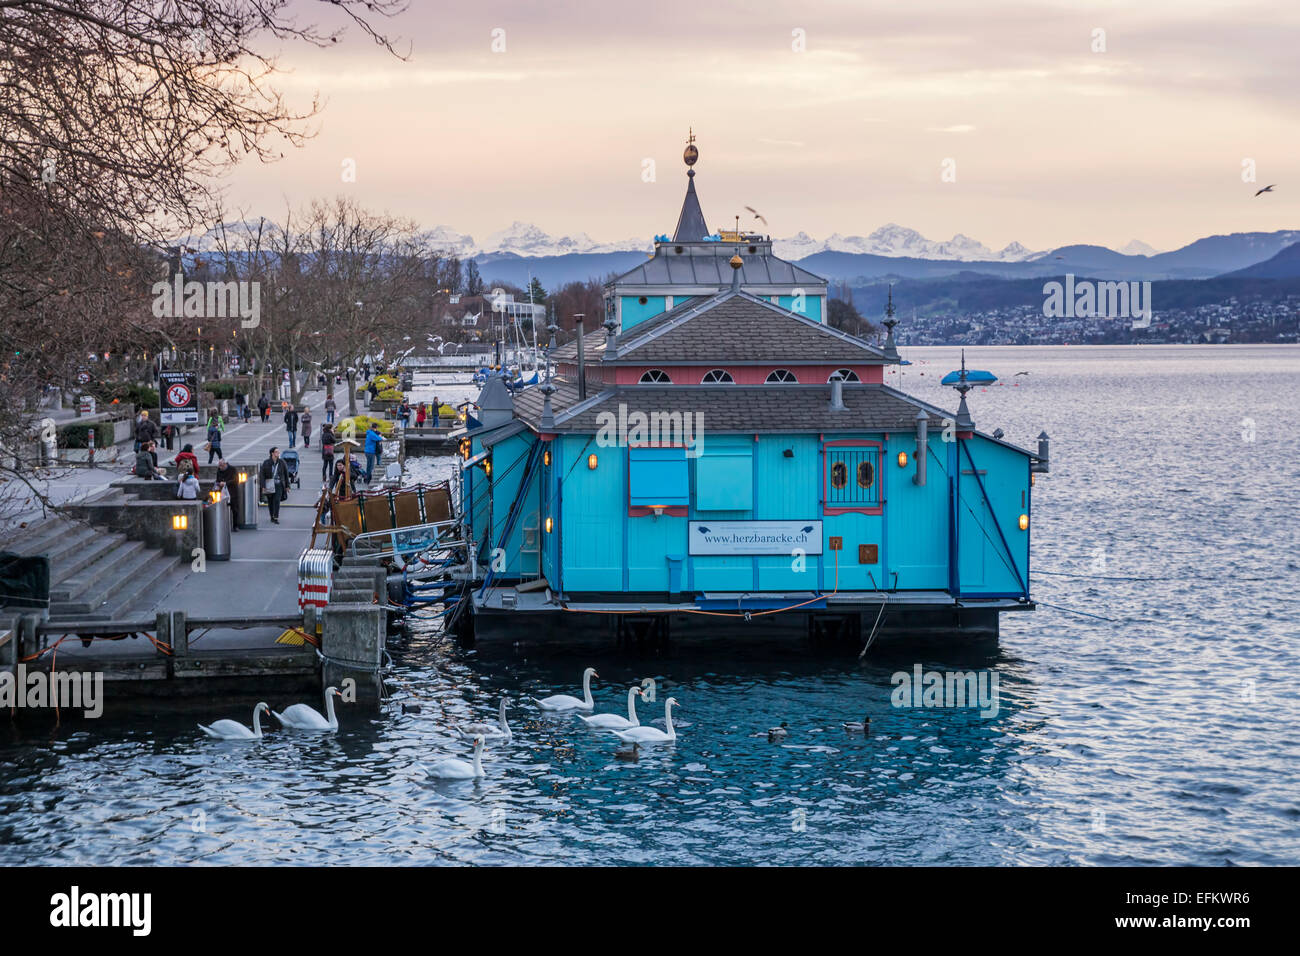 Herzbaracke Boat Theater at Zurich lake in Winter, Switzerland Stock Photo